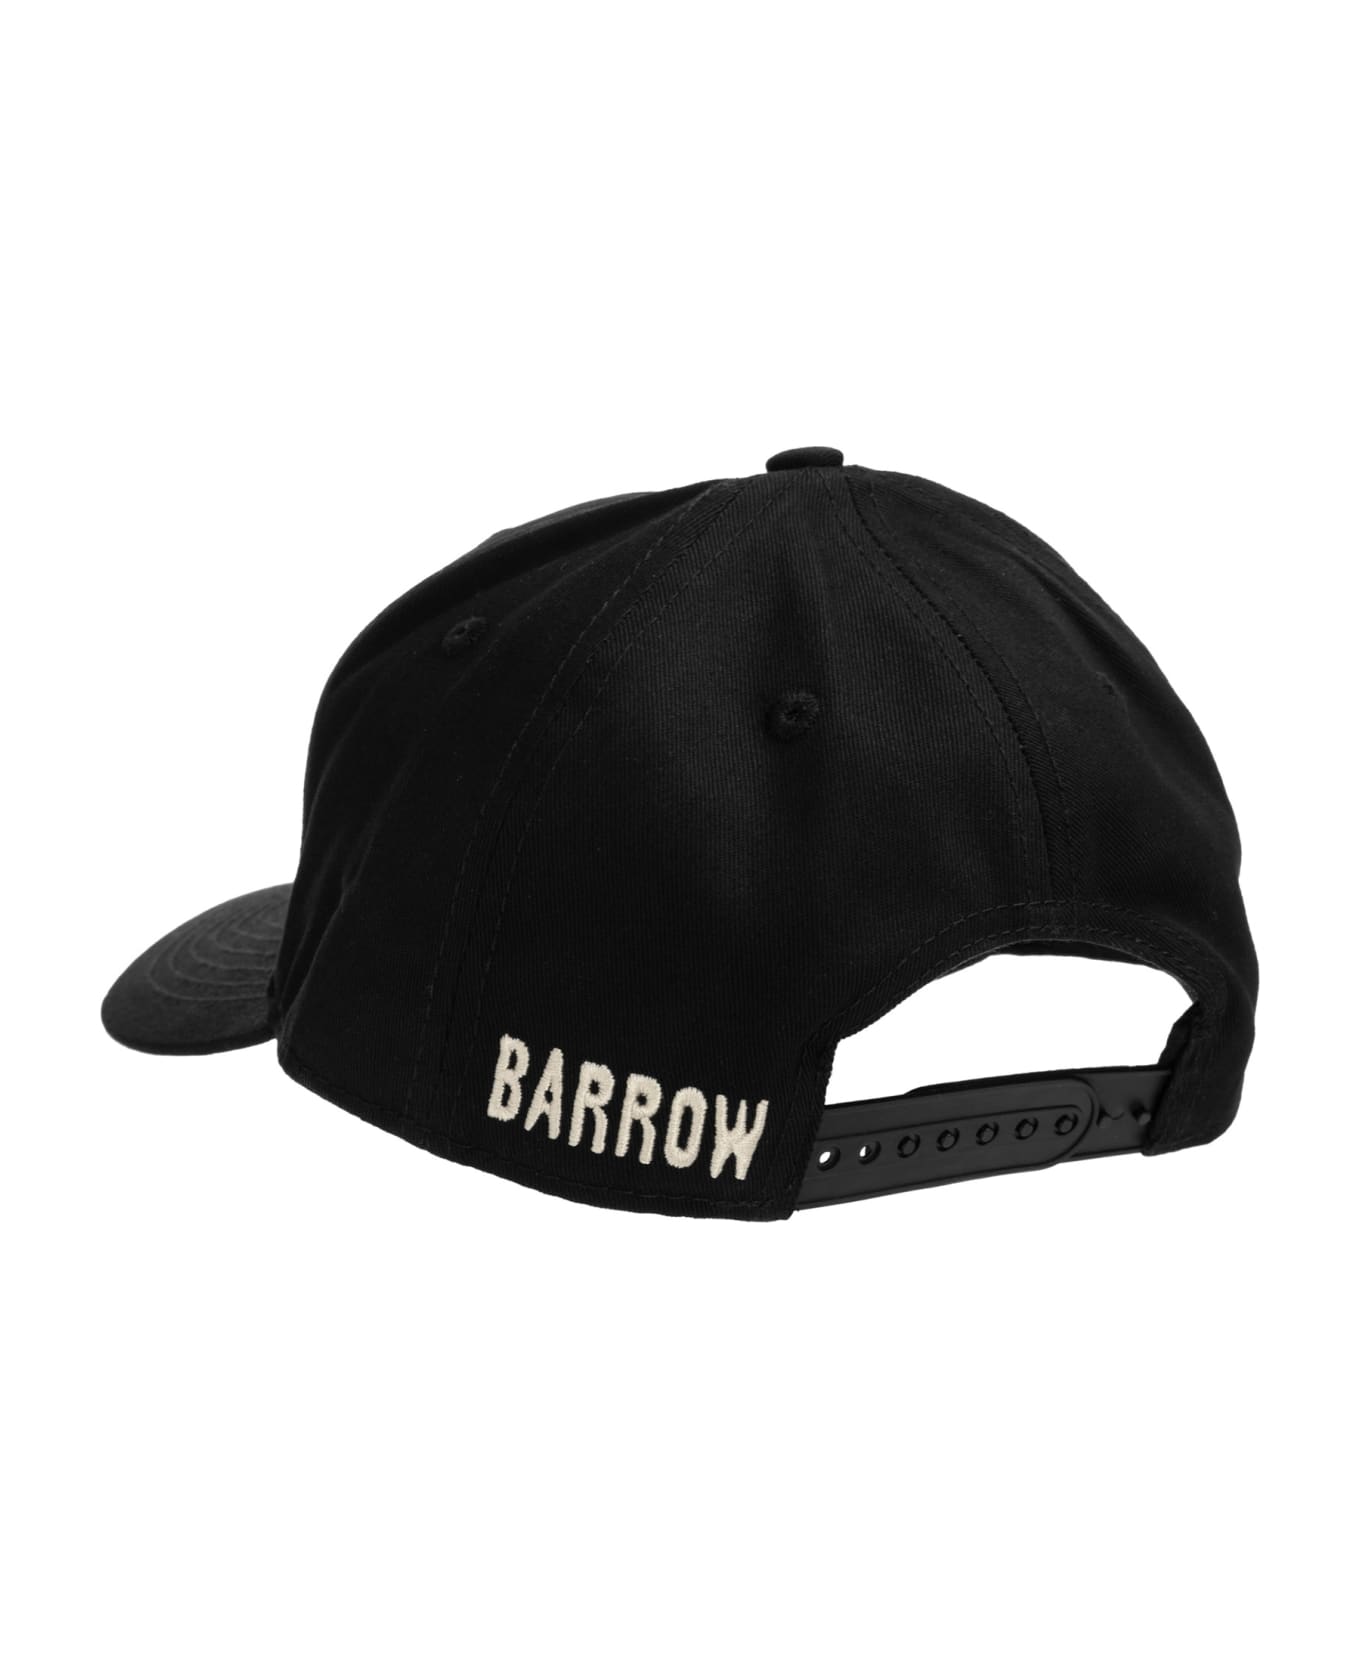 Barrow Black Baseball Cap With Logo - Black